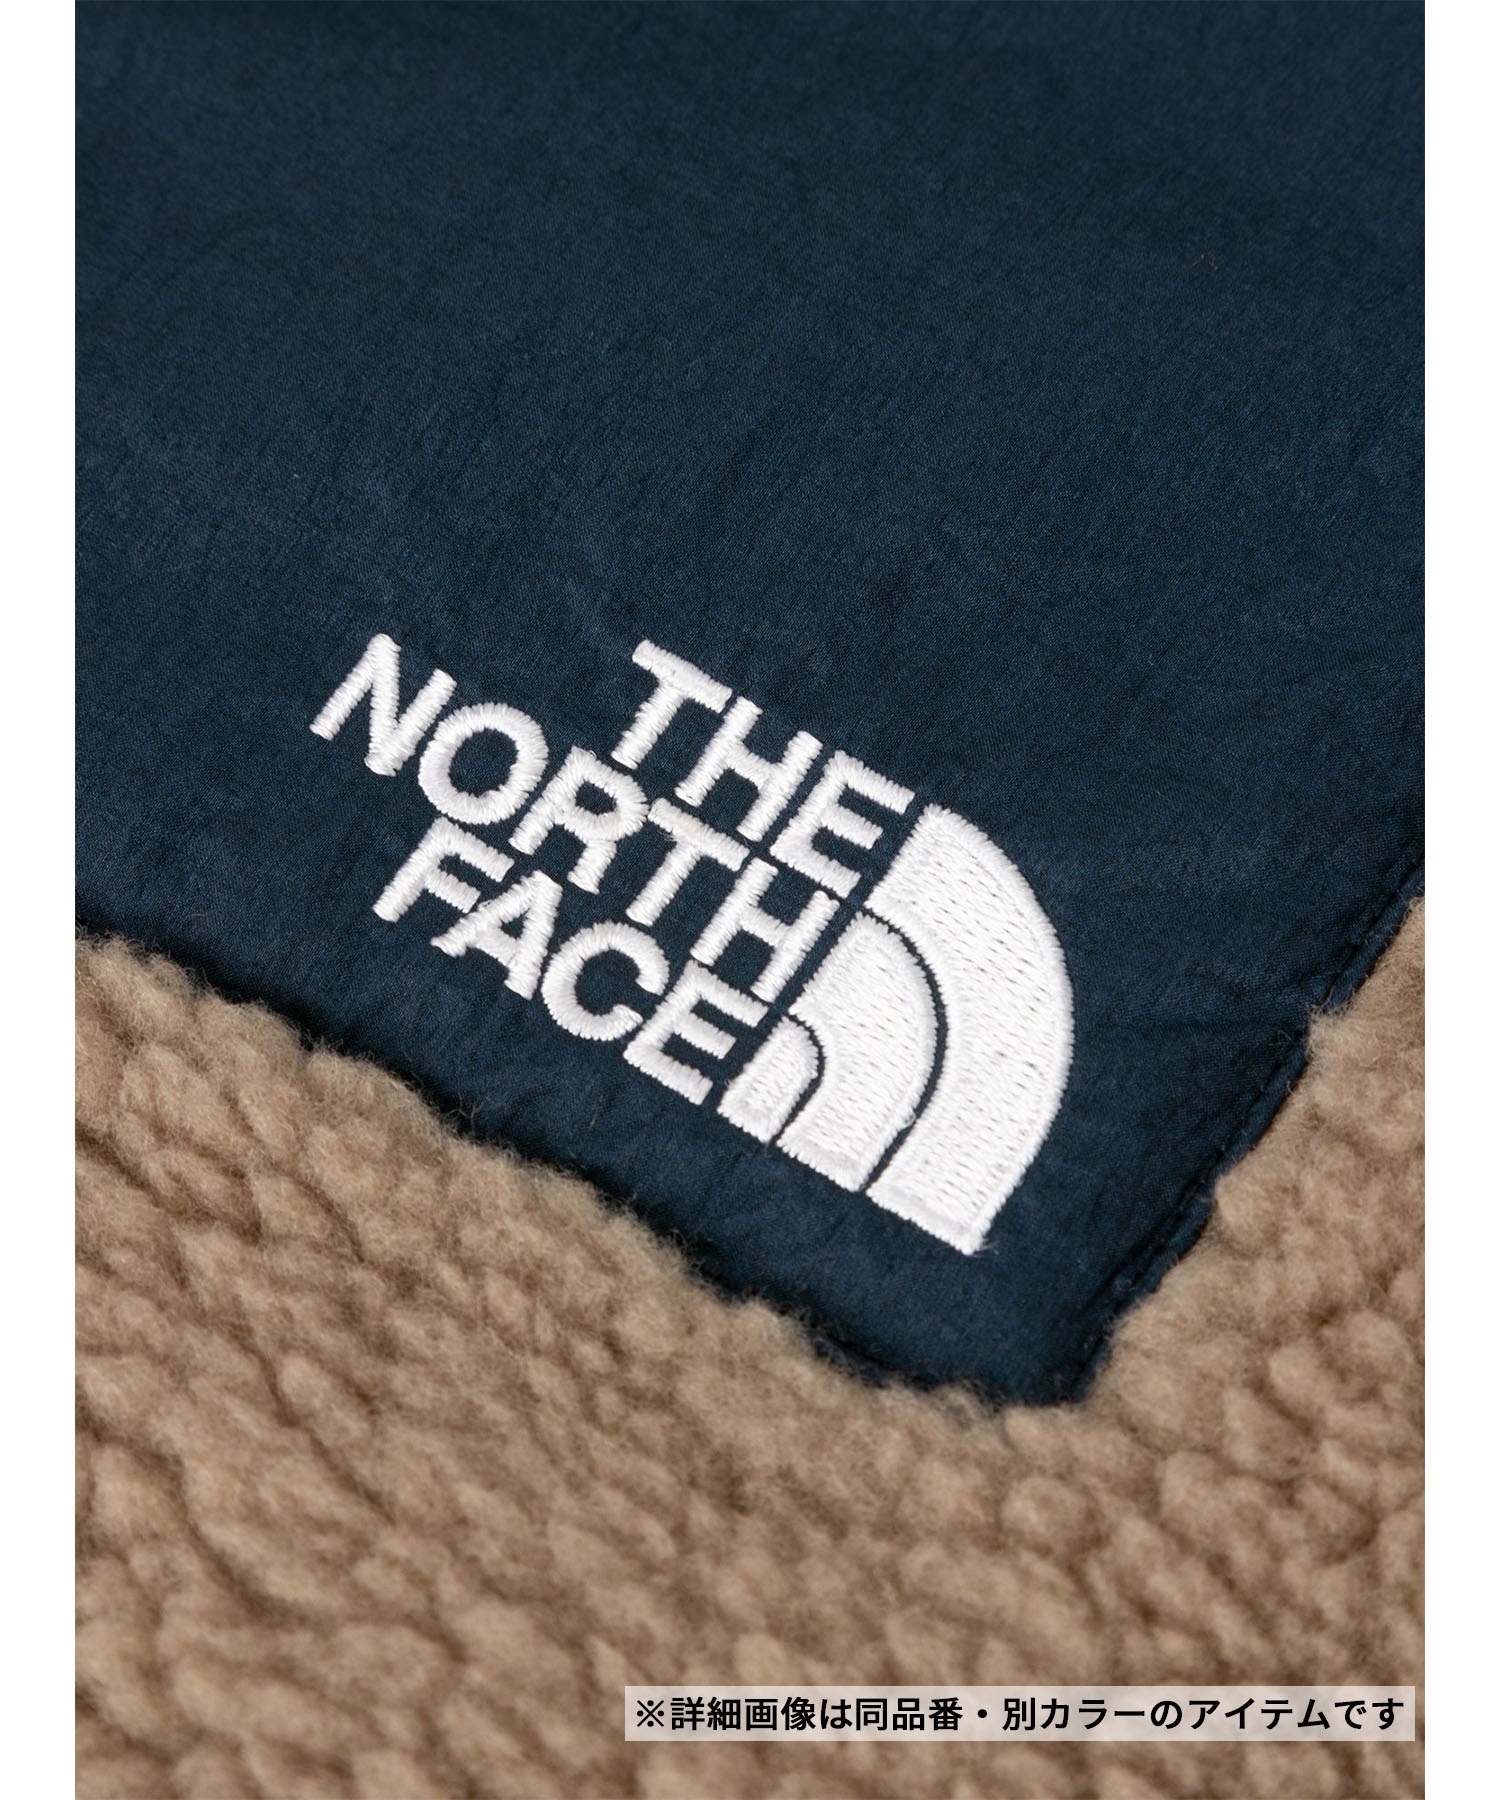 THE NORTH FACE/ザ・ノース・フェイス Reversible Extreme Pile Jacket リバーシブルジャケット NP72333(MK-XS)